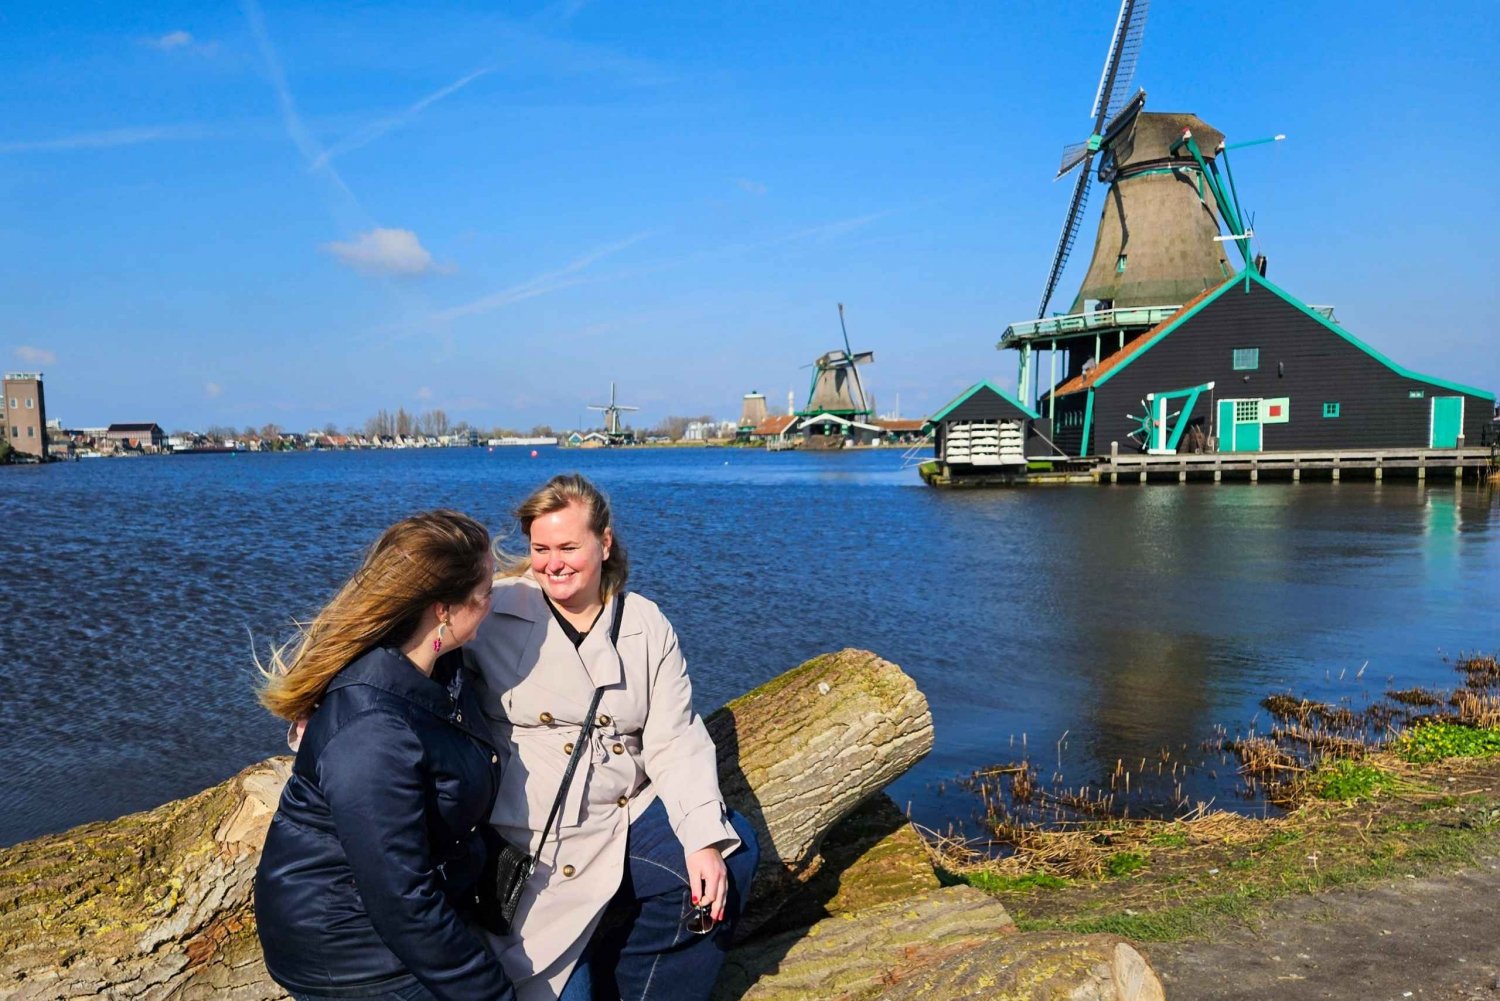 Amsterdam: Live-guidet tur med Zaanse Schans og ostesmagning